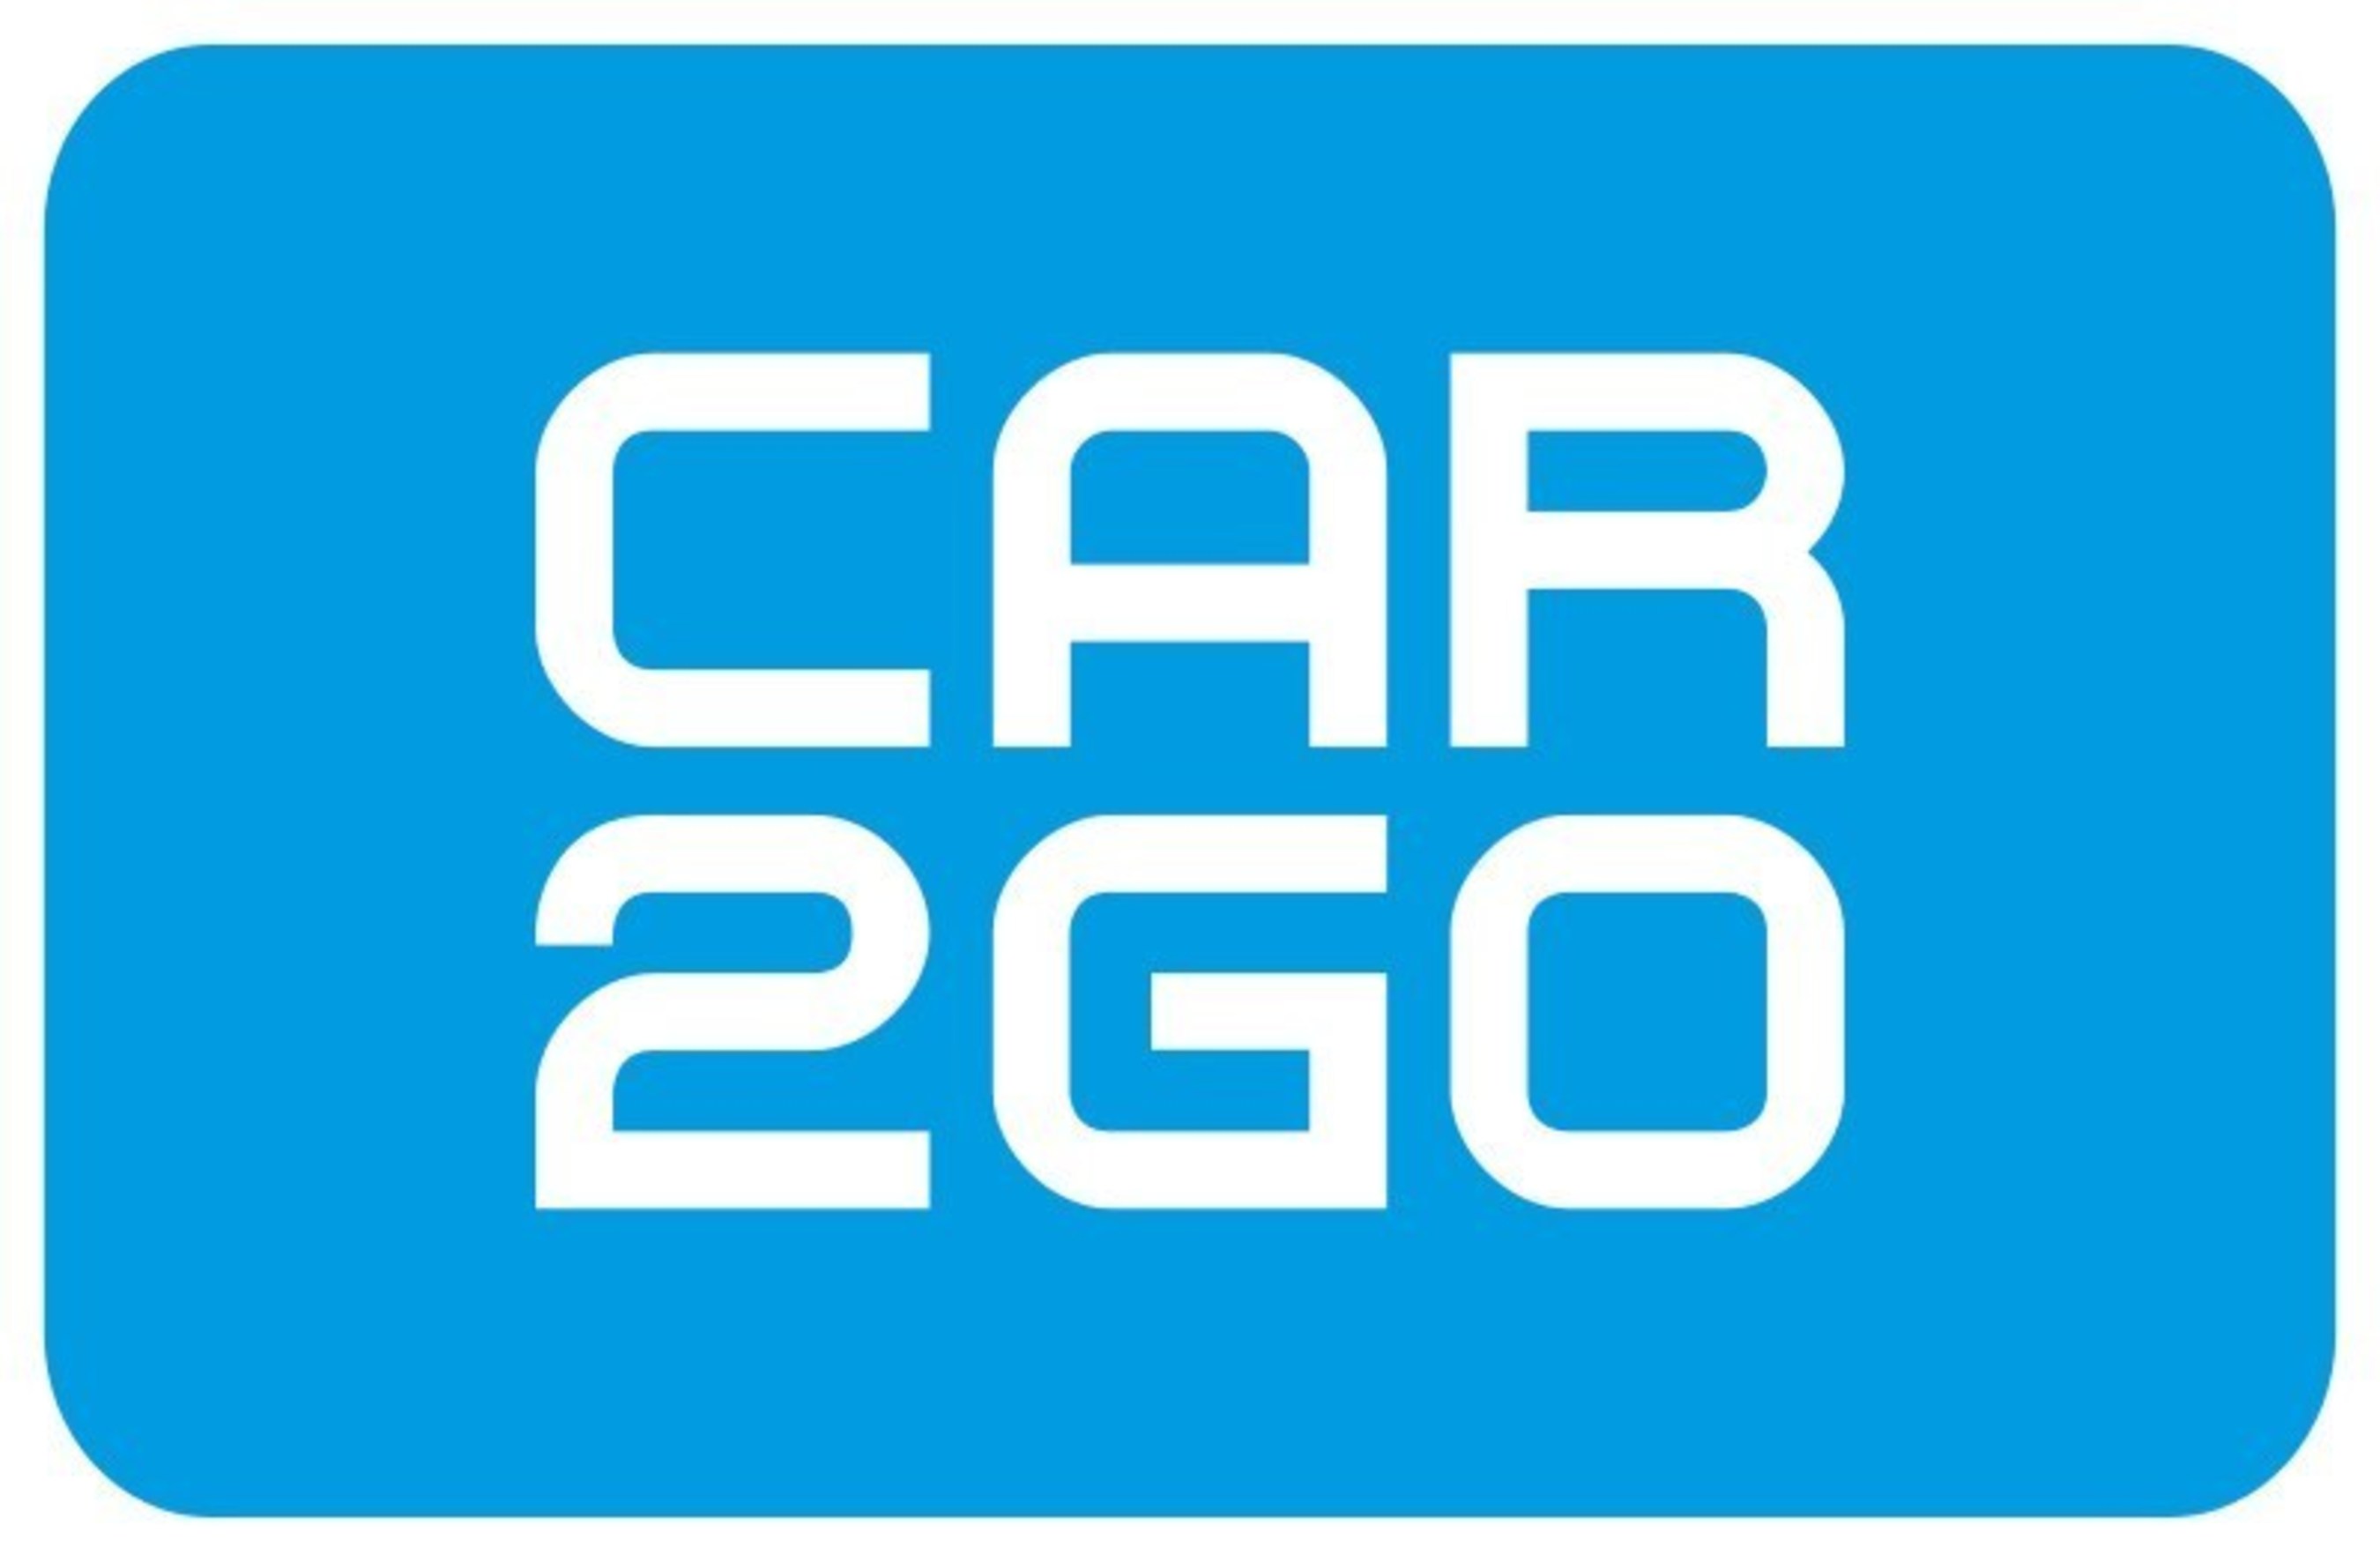 car2go logo